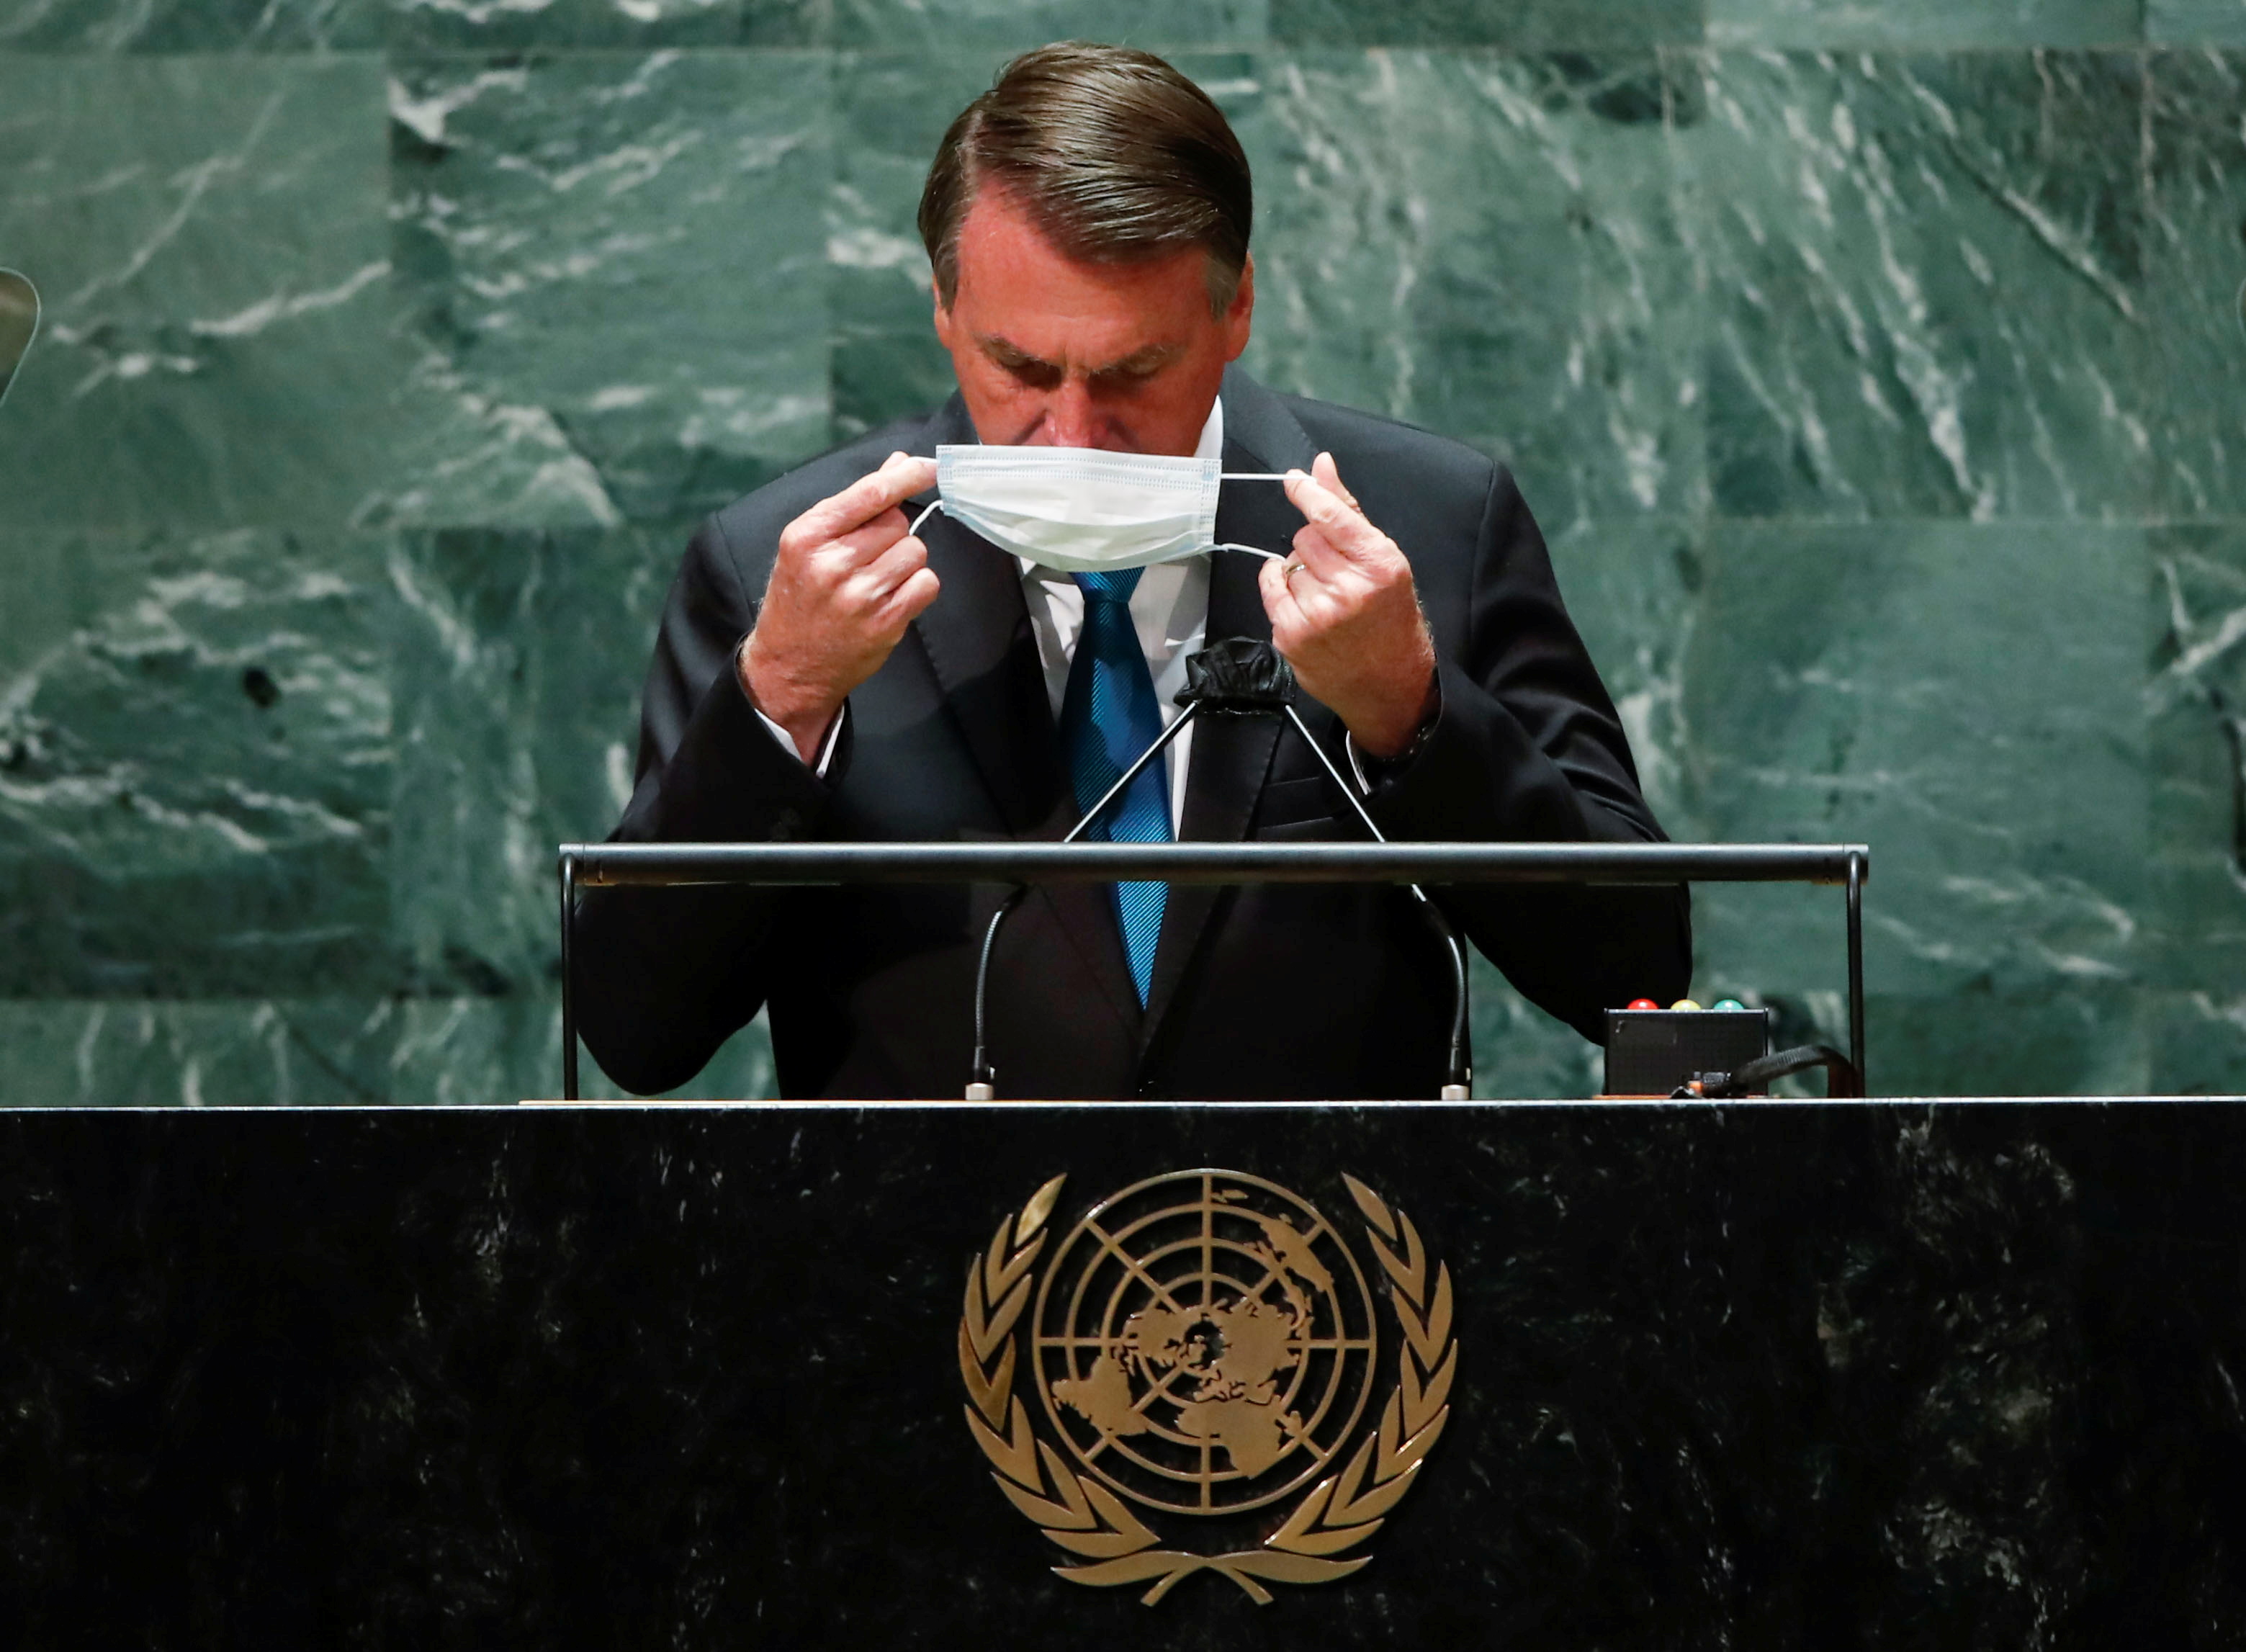 Brazil's President Jair Bolsonaro addresses the 76th Session of the U.N. General Assembly in New York City